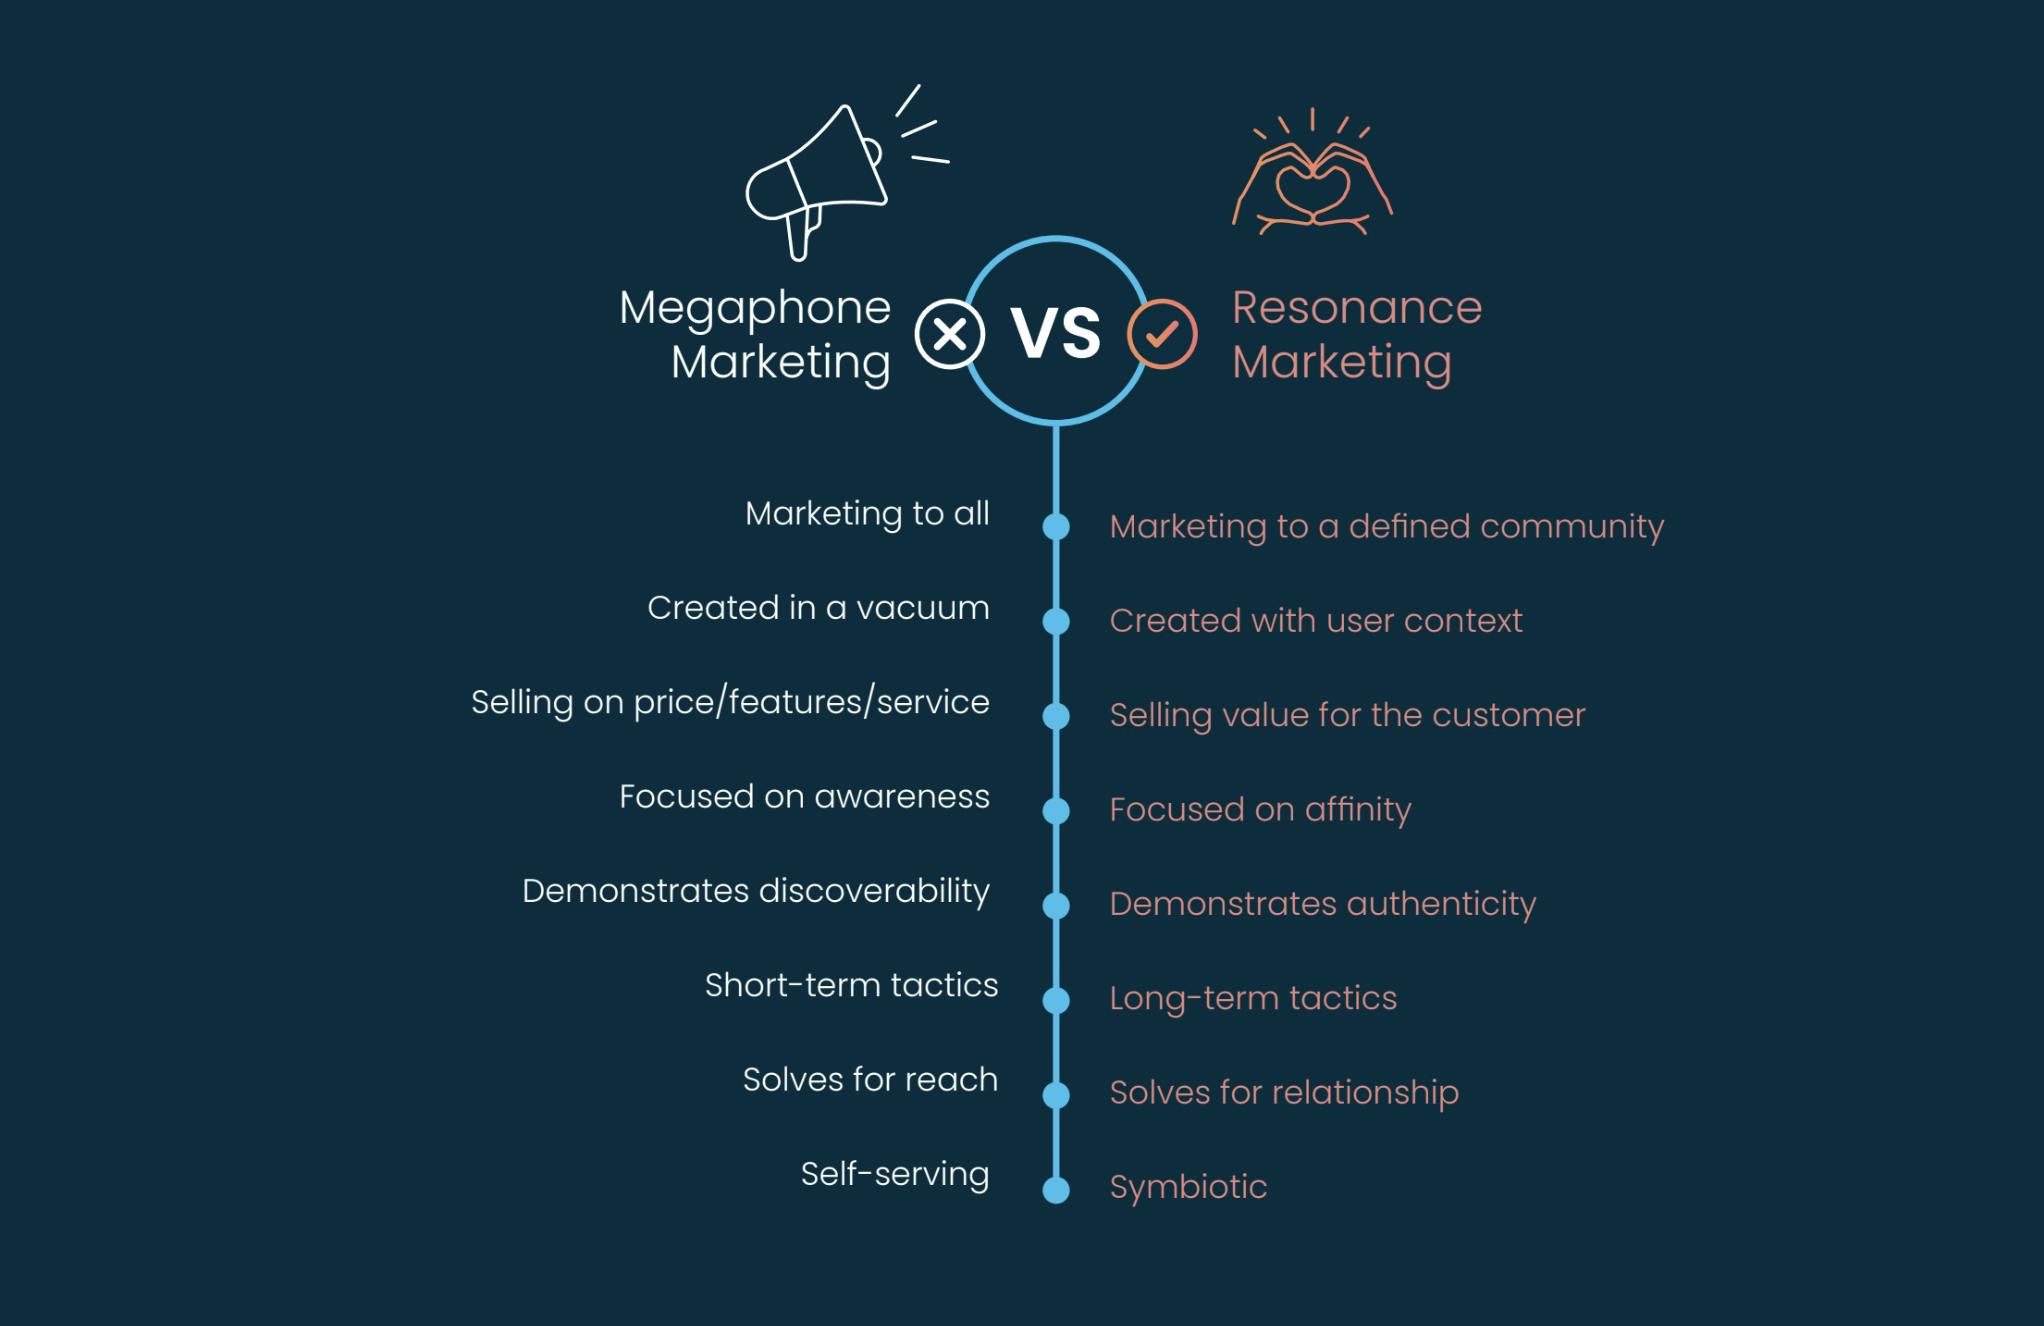 Megaphone marketing vs. resonance marketing infographic